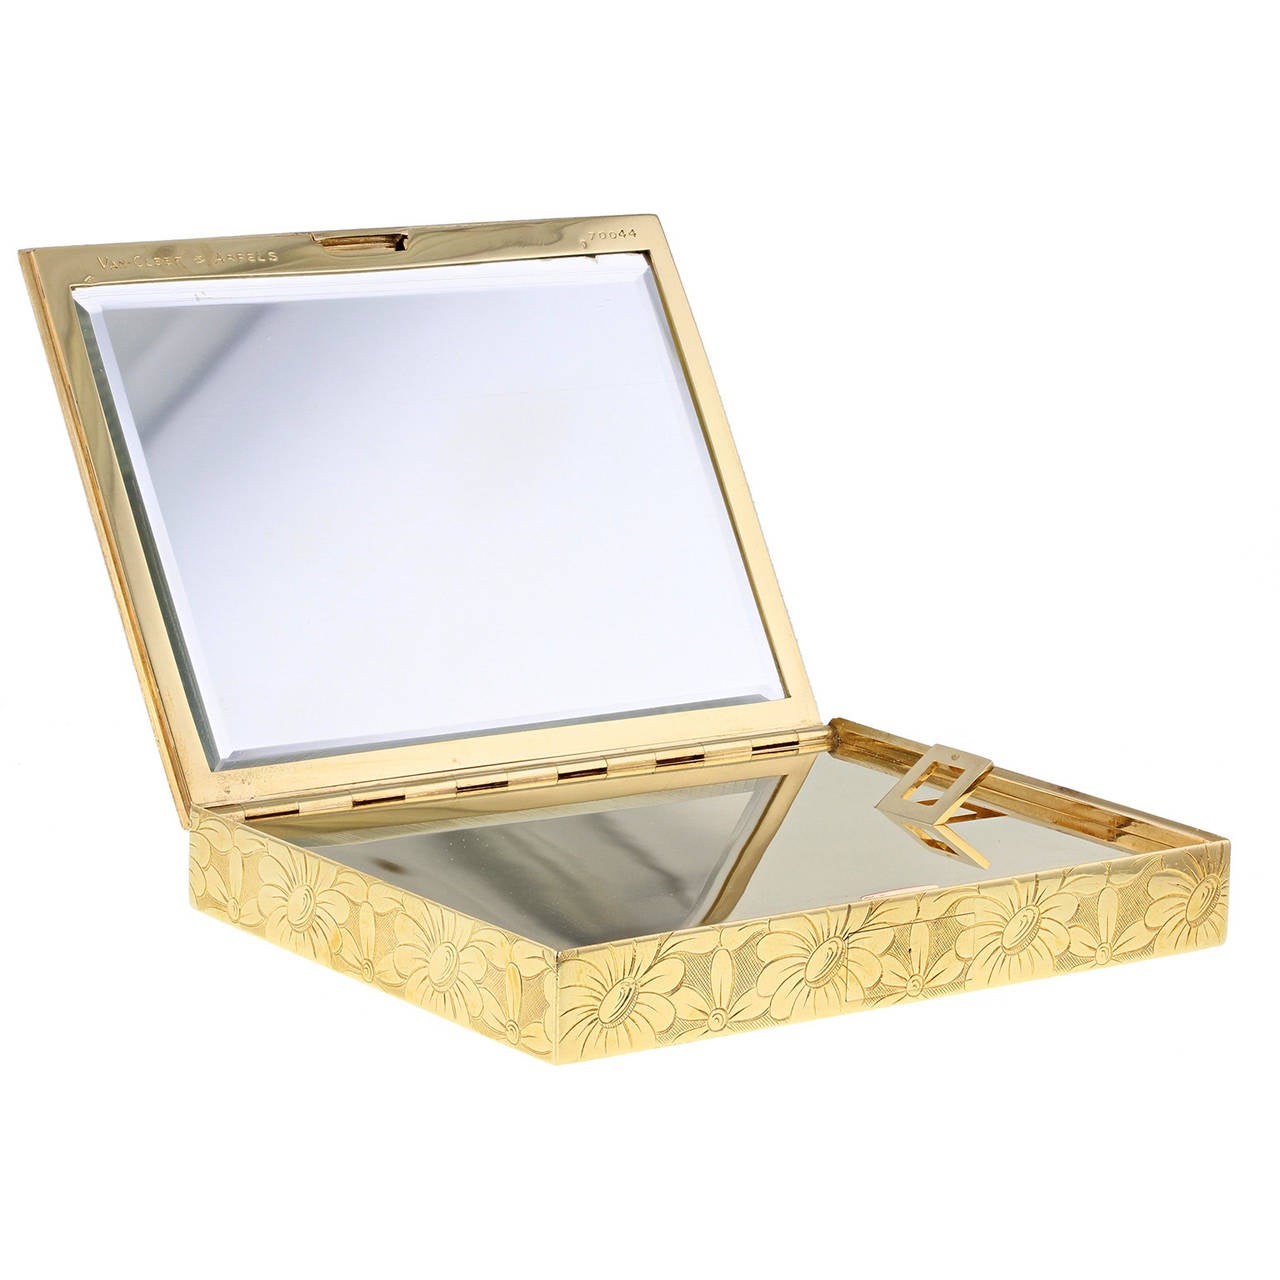 Retro Van Cleef & Arpels Gold Diamond Lady's Compact